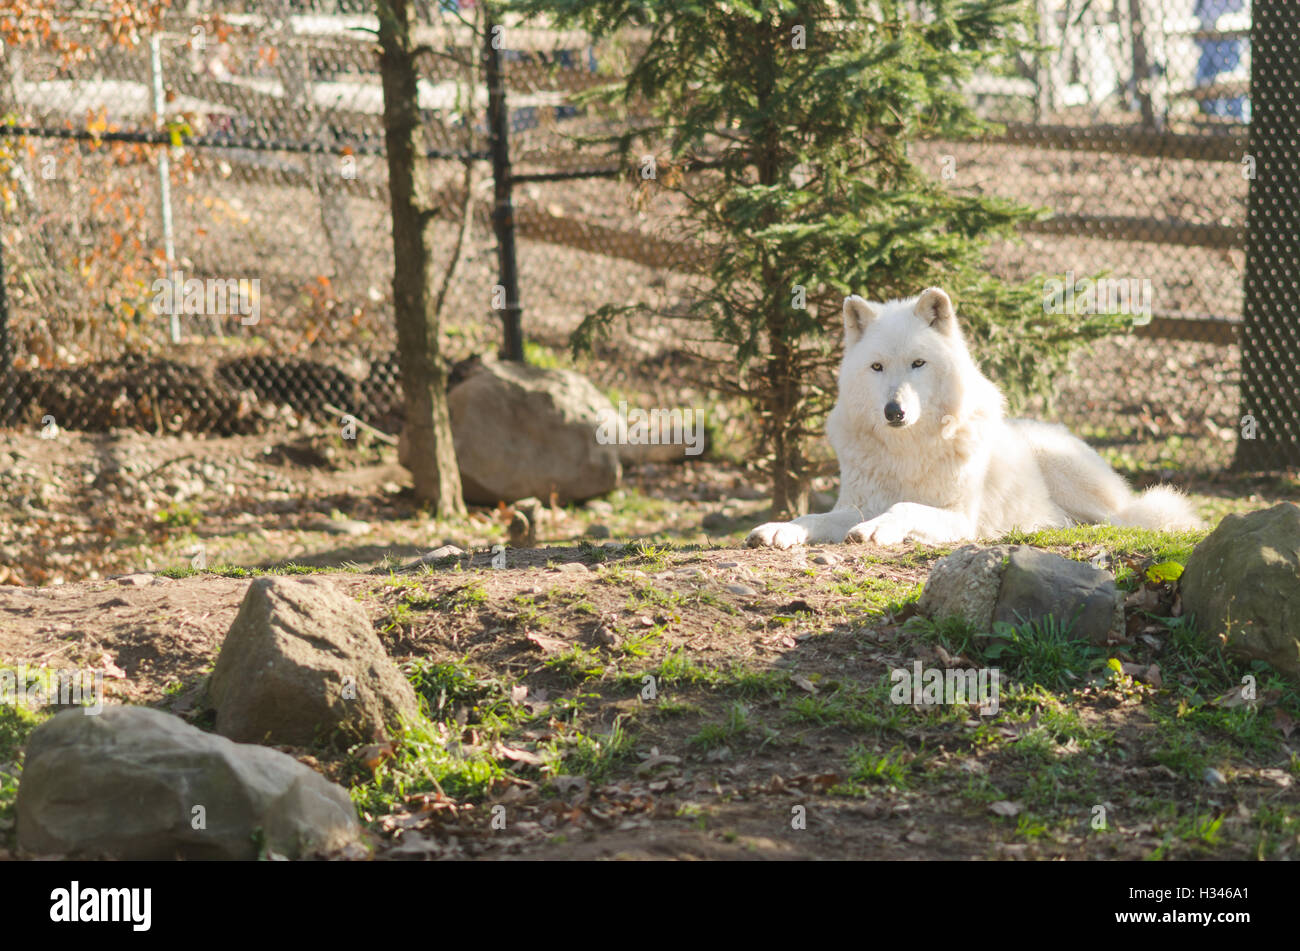 Single Captive Artic Wolf (Canis lupus arctos) in Zoo enclosure Stock Photo